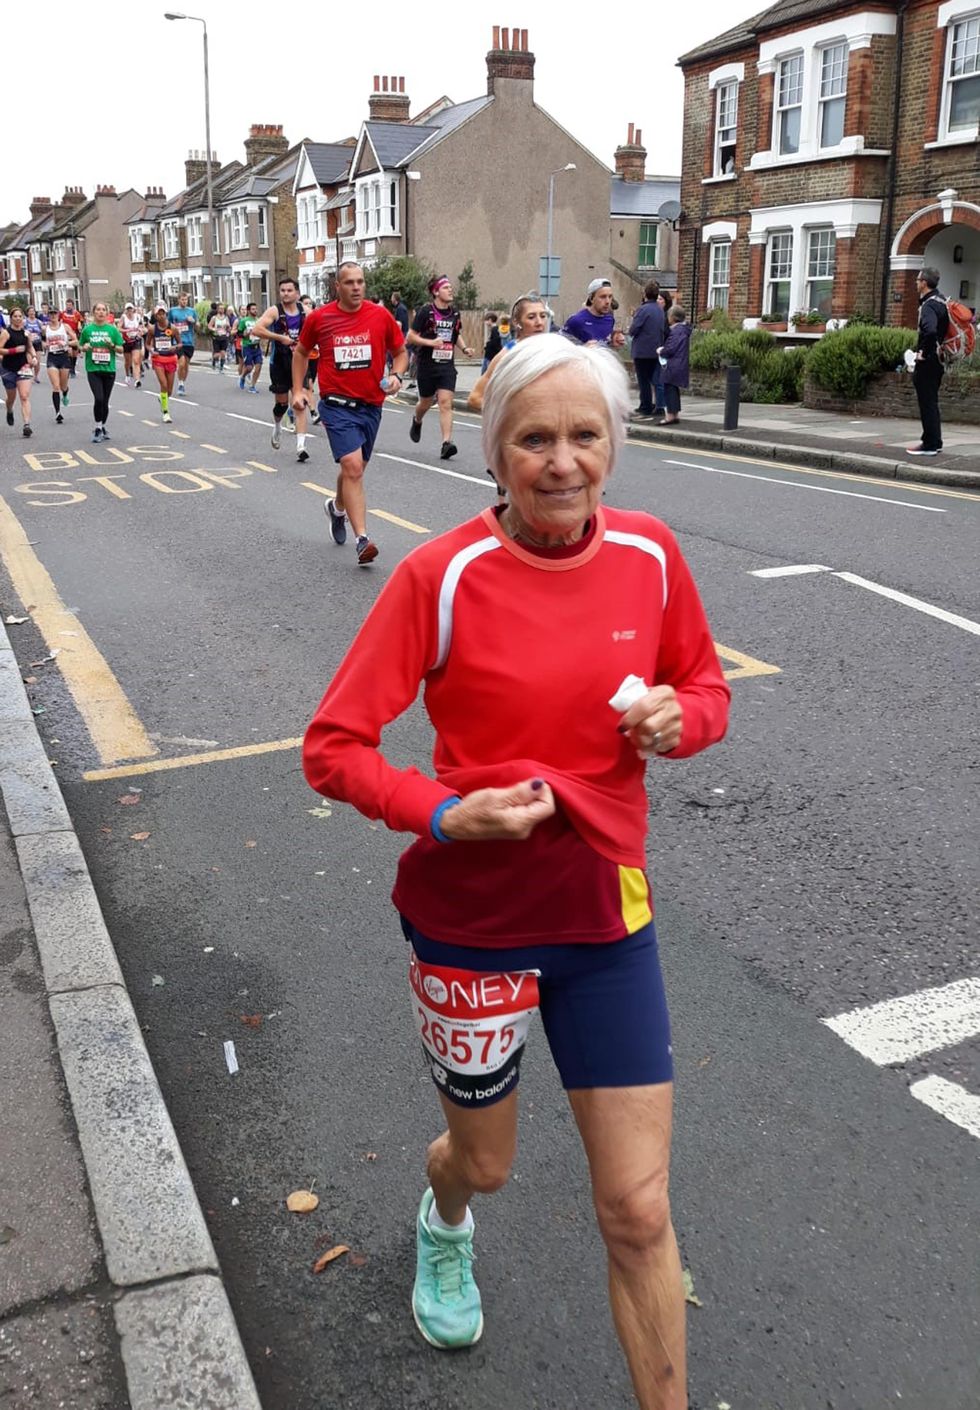 Landmark 600th race beckons for woman, 77, who has run most London Marathons